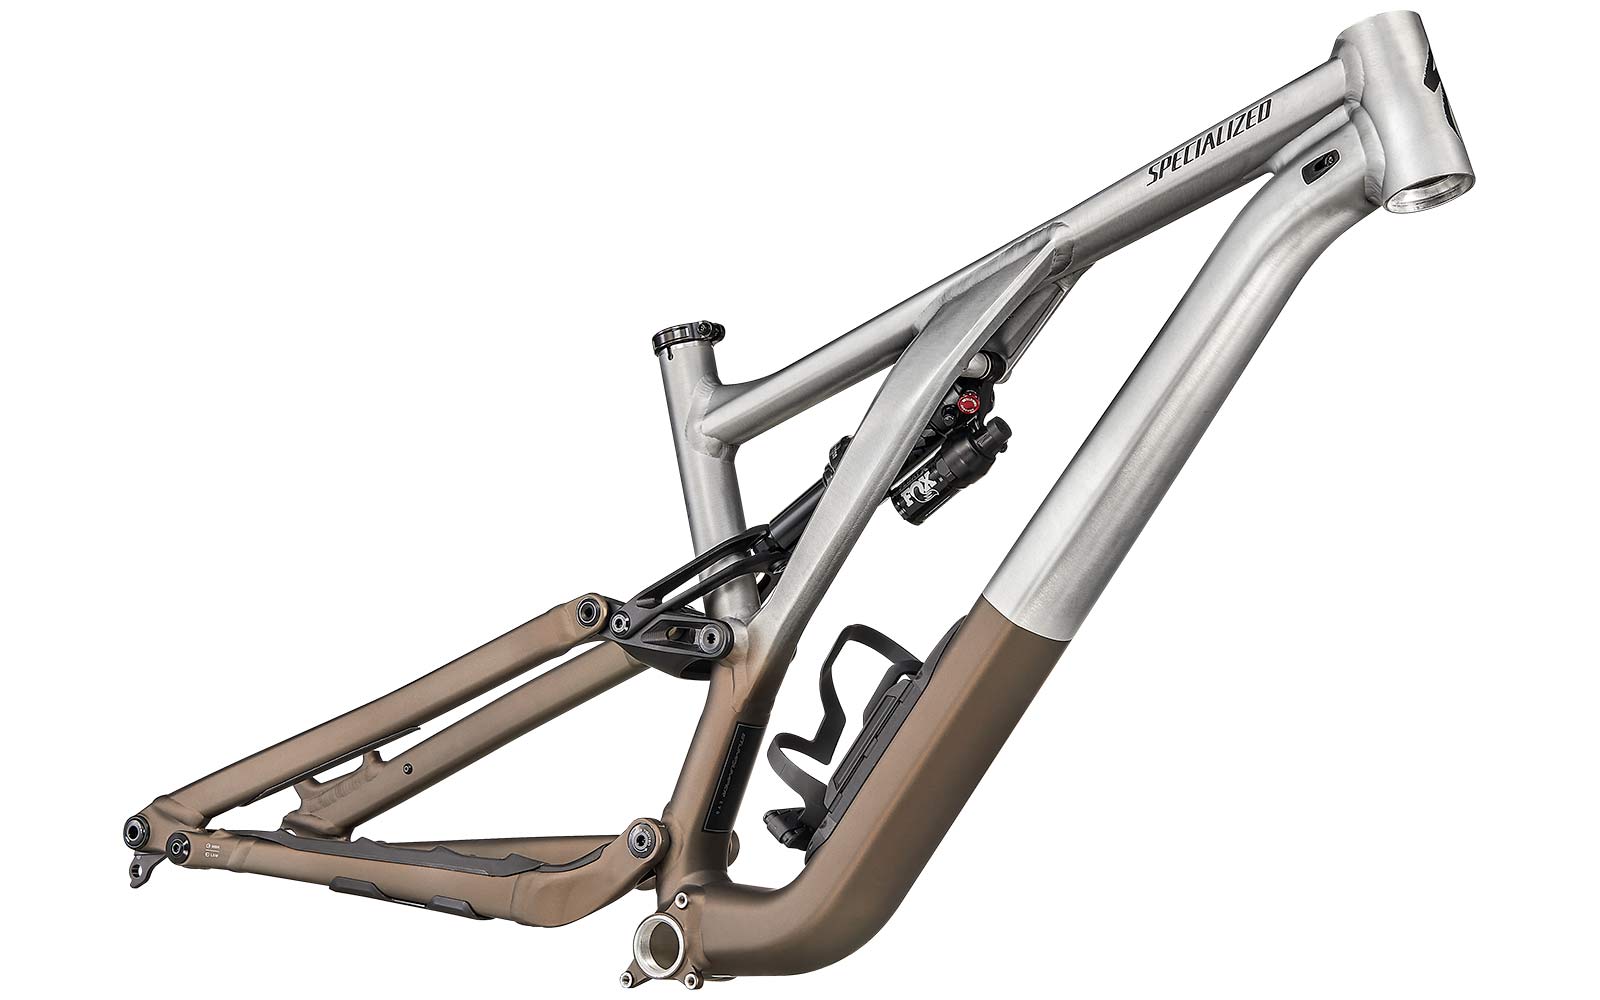 2022 Specialized Stumpjumper EVO Alloy trail bike, more affordable aluminum frameset